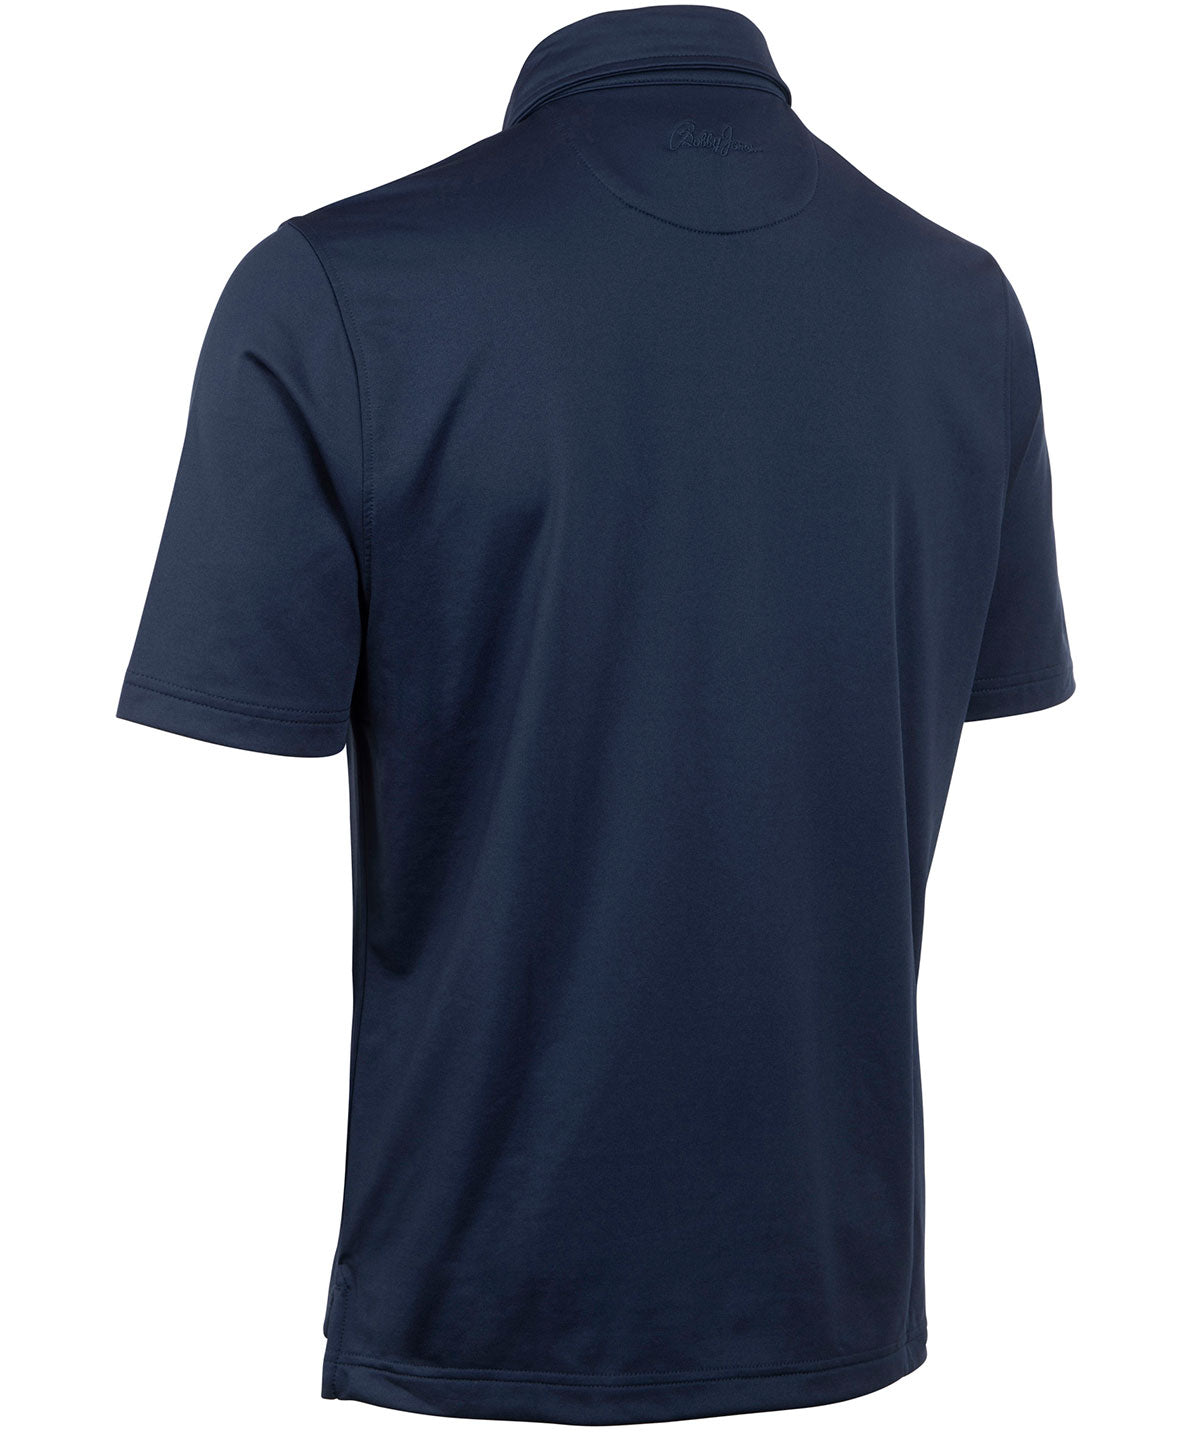 Performance Brushed-Back Stretch Jersey Cabana Sport Shirt